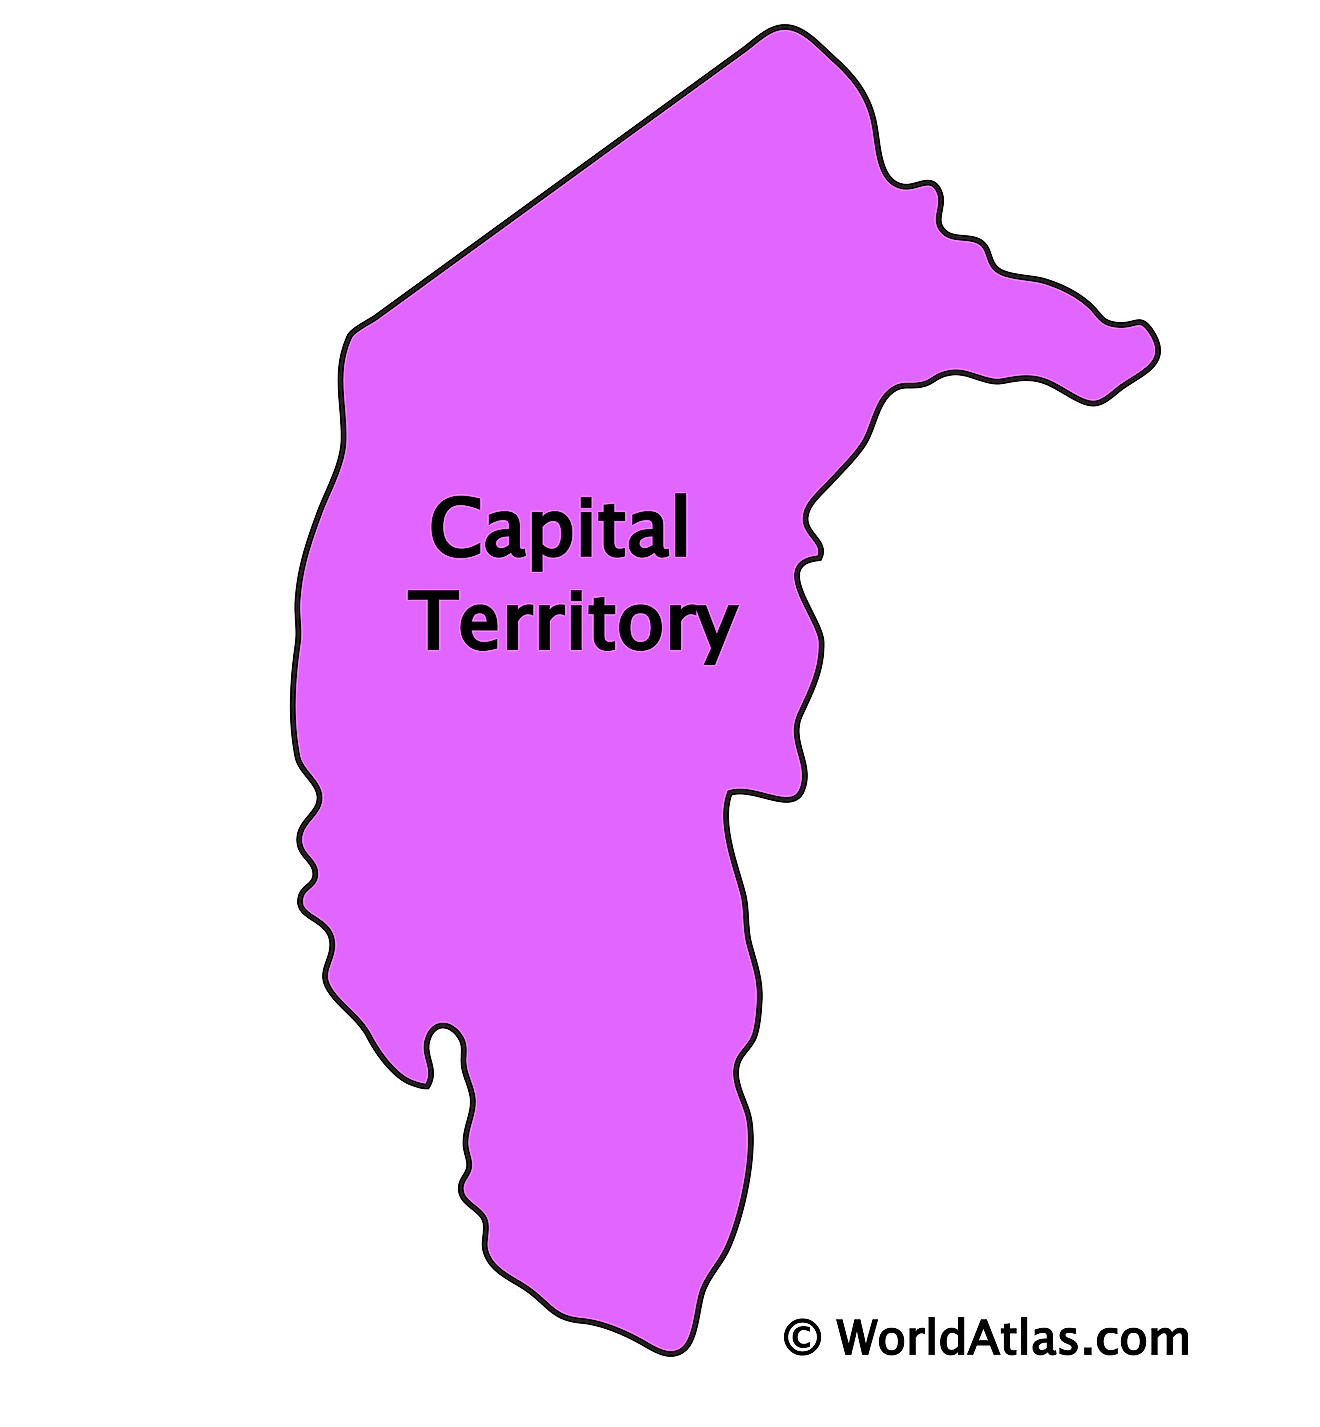 Outline Map of Australian Capital Territory